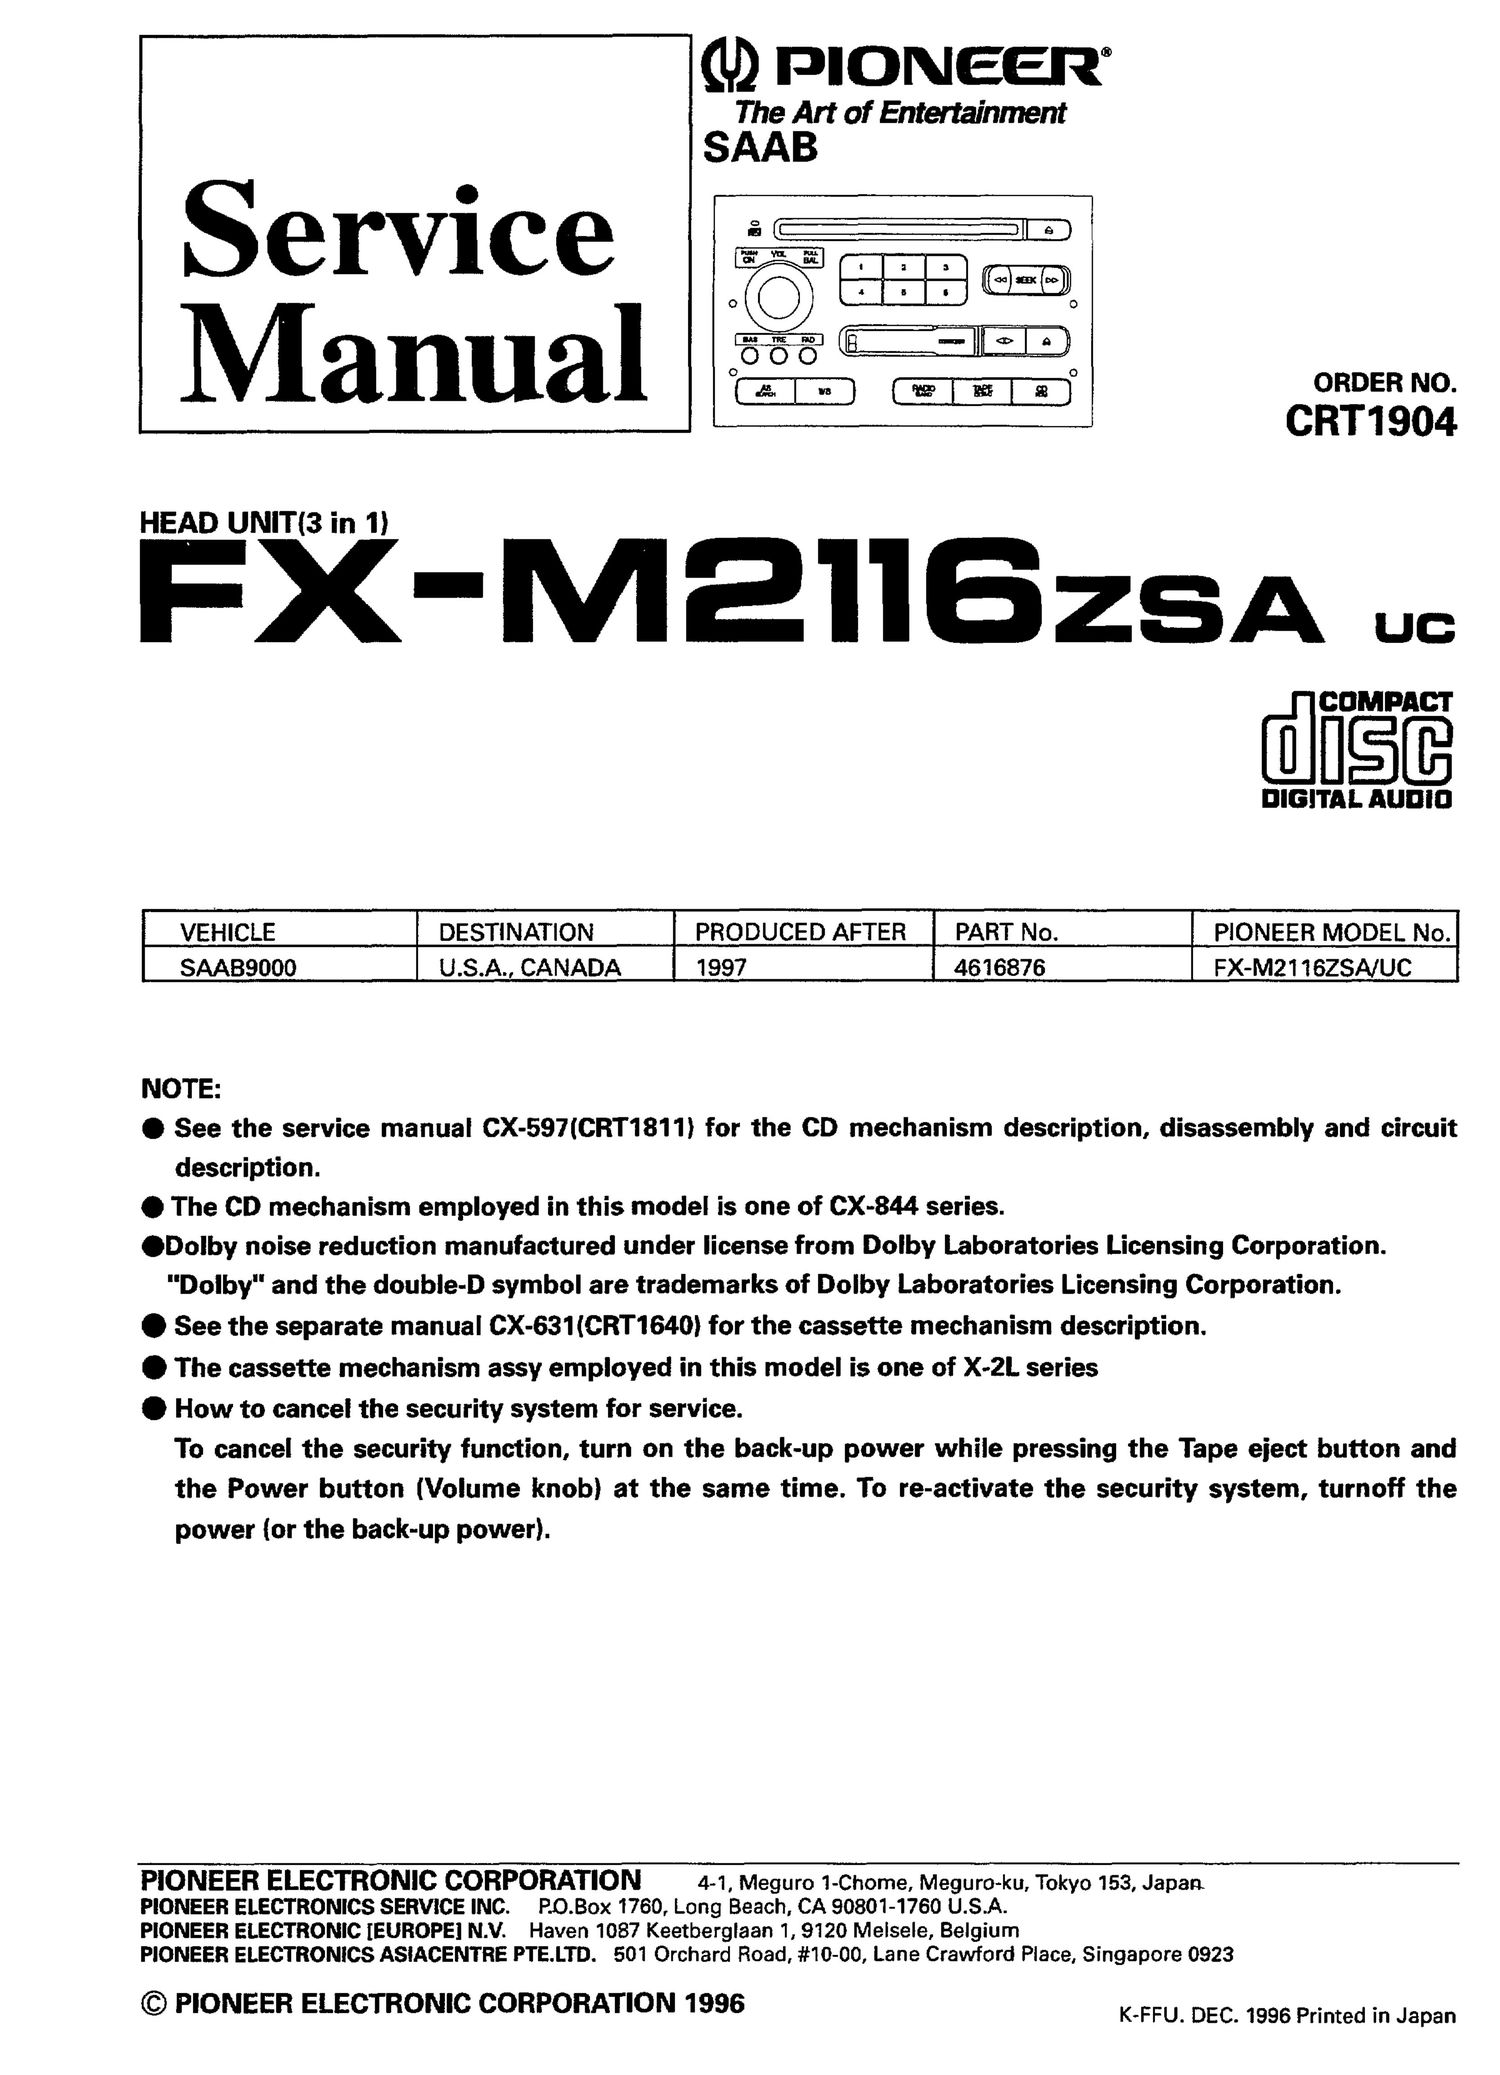 pioneer fxm 2116 service manual